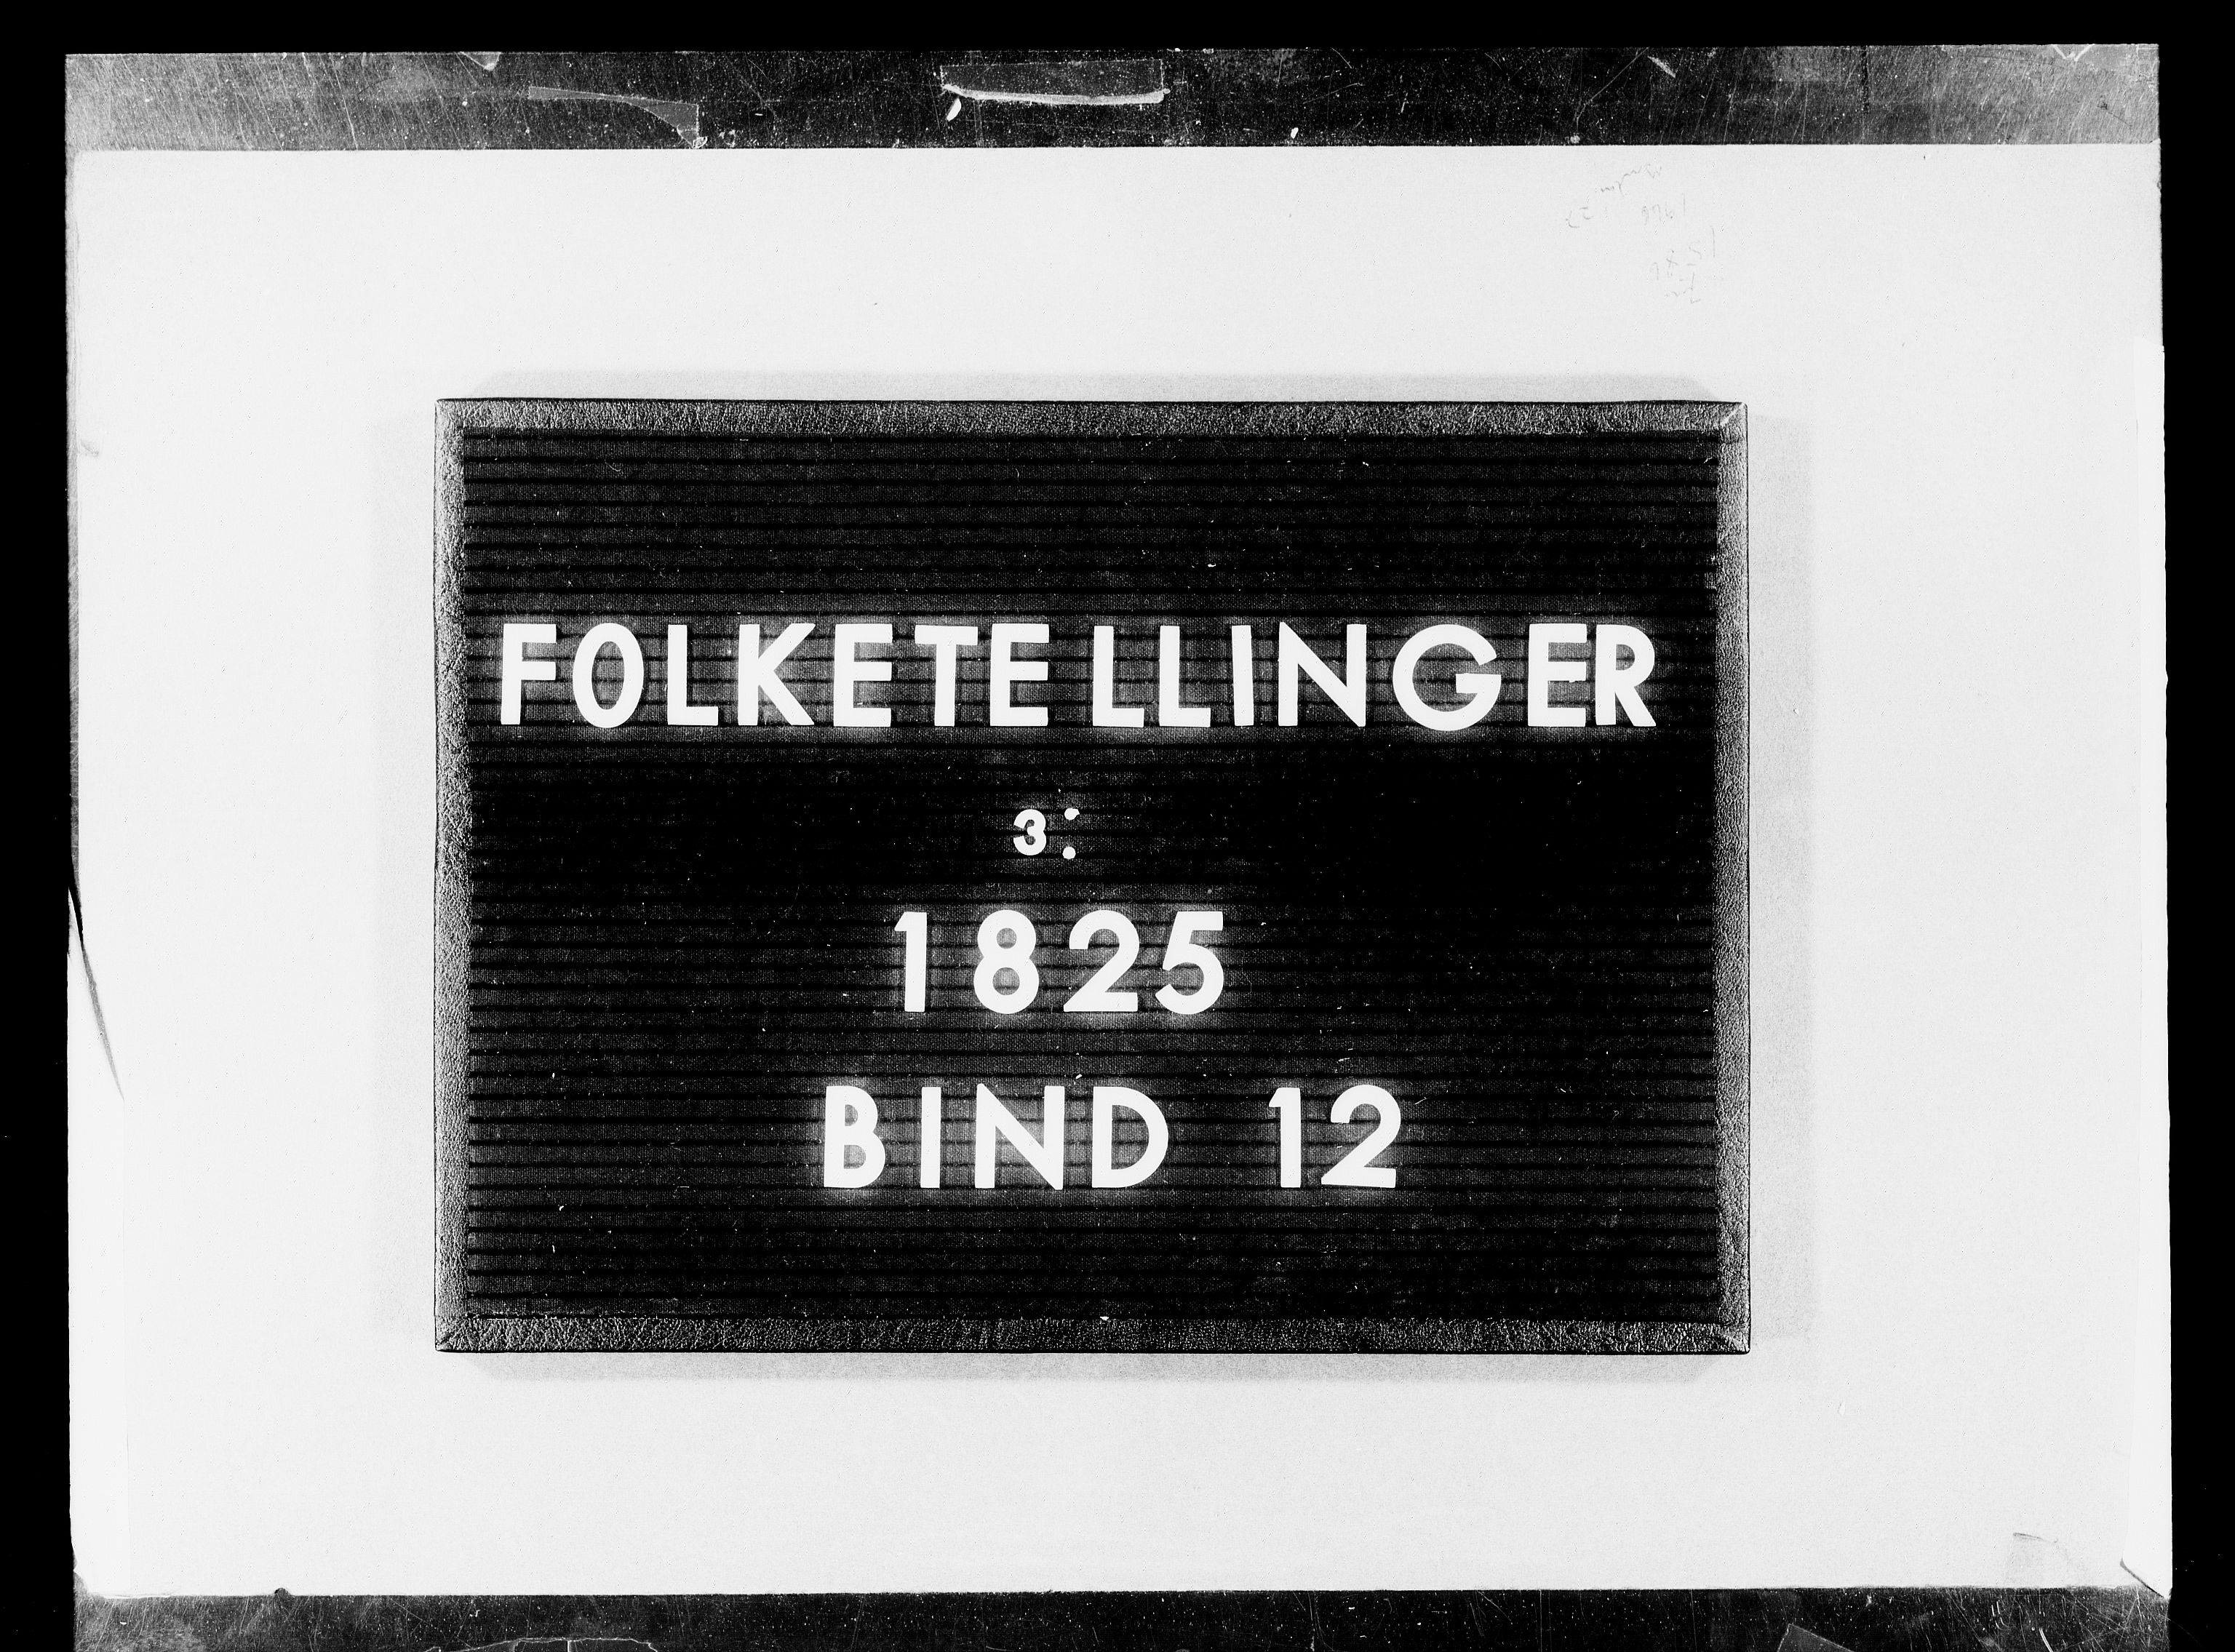 RA, Folketellingen 1825, bind 12: Stavanger amt, 1825